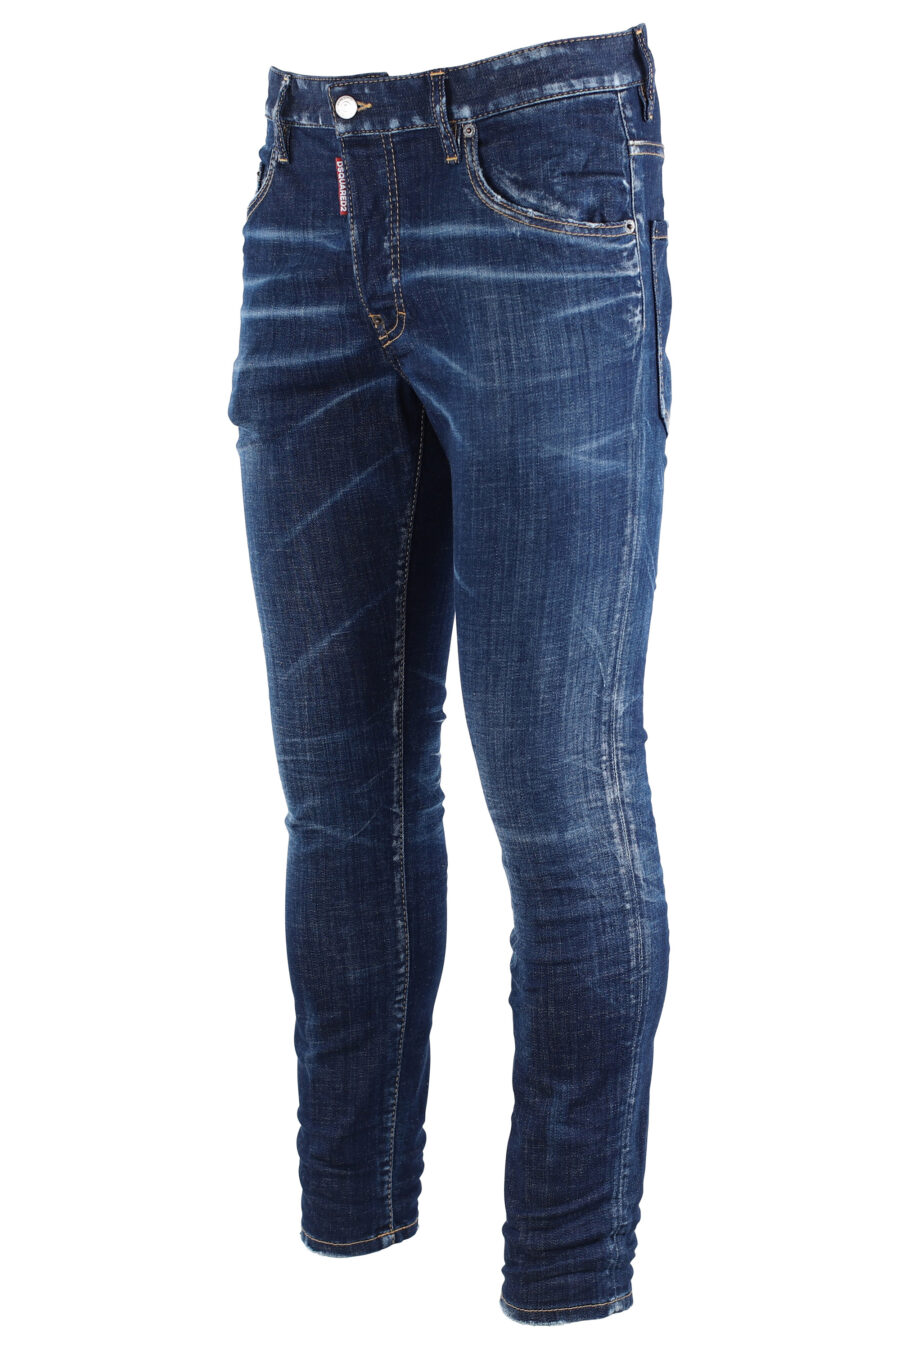 Denim trousers "24 seven skater jean" blue semi-worn - IMG 1614